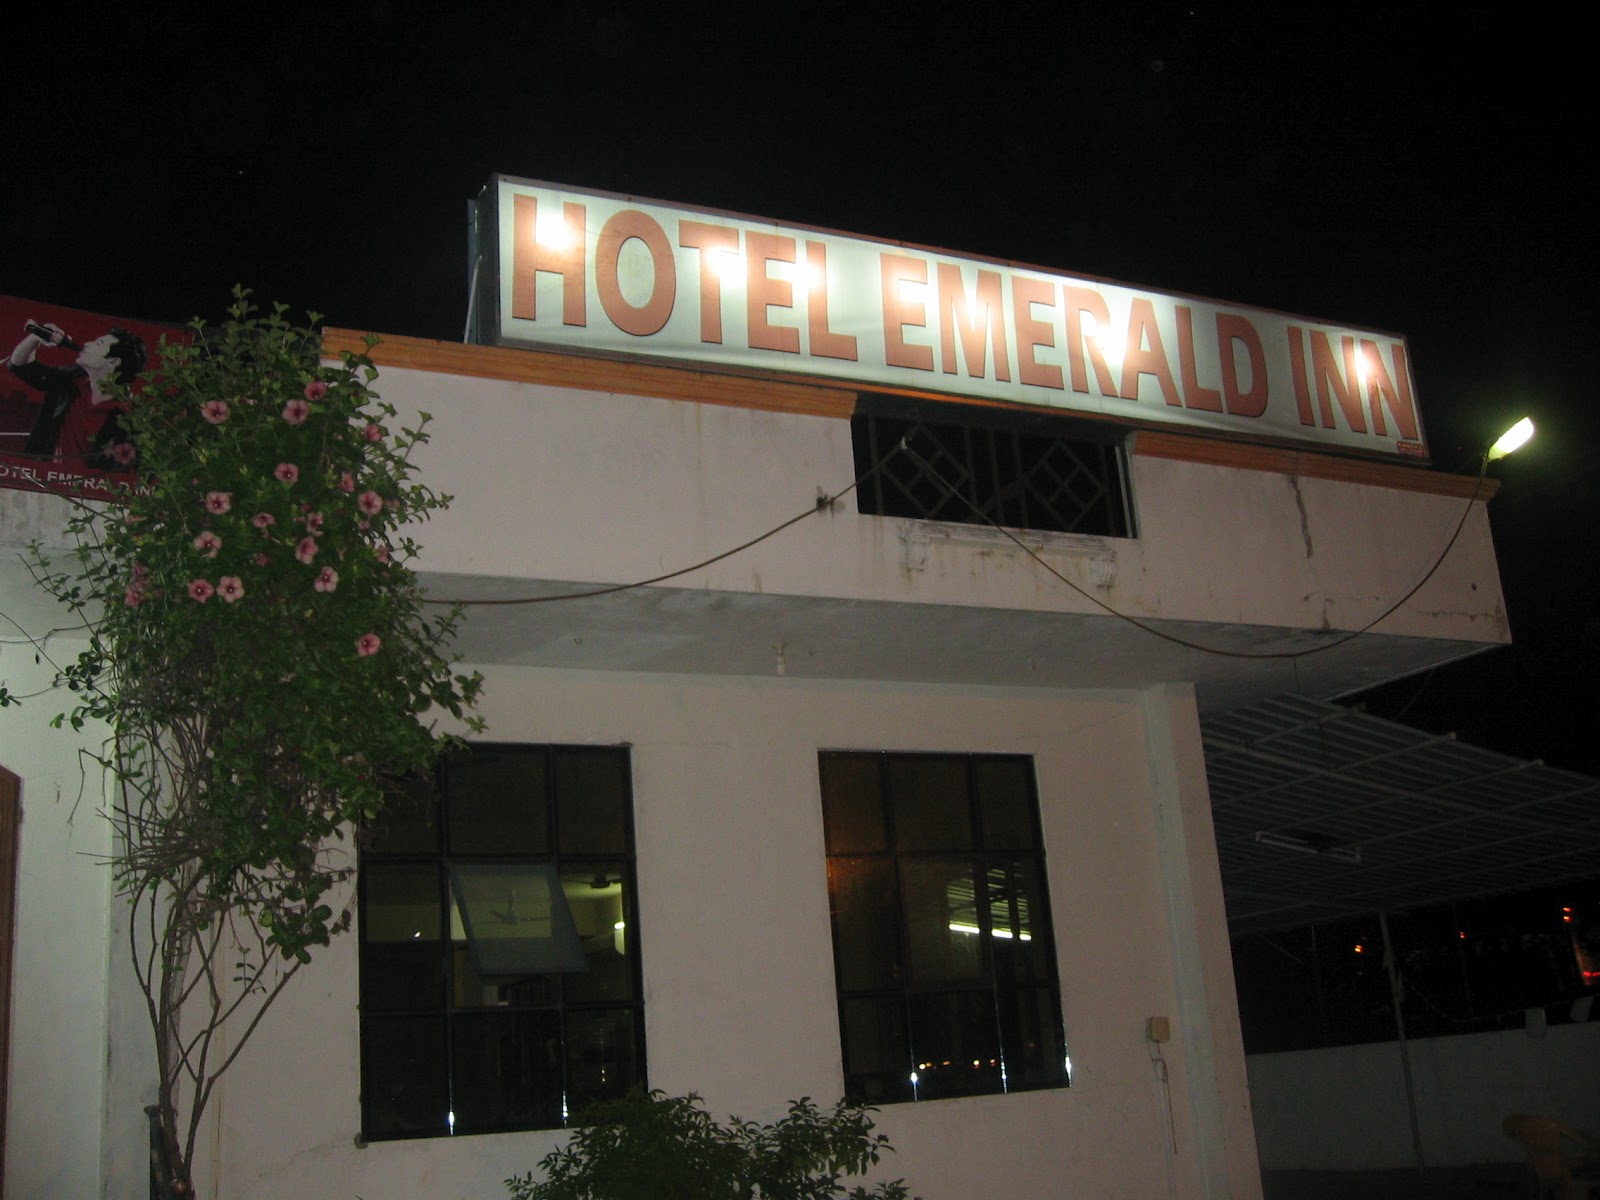 Hotel Emerald Inn: About the Hotel Emerald Inn